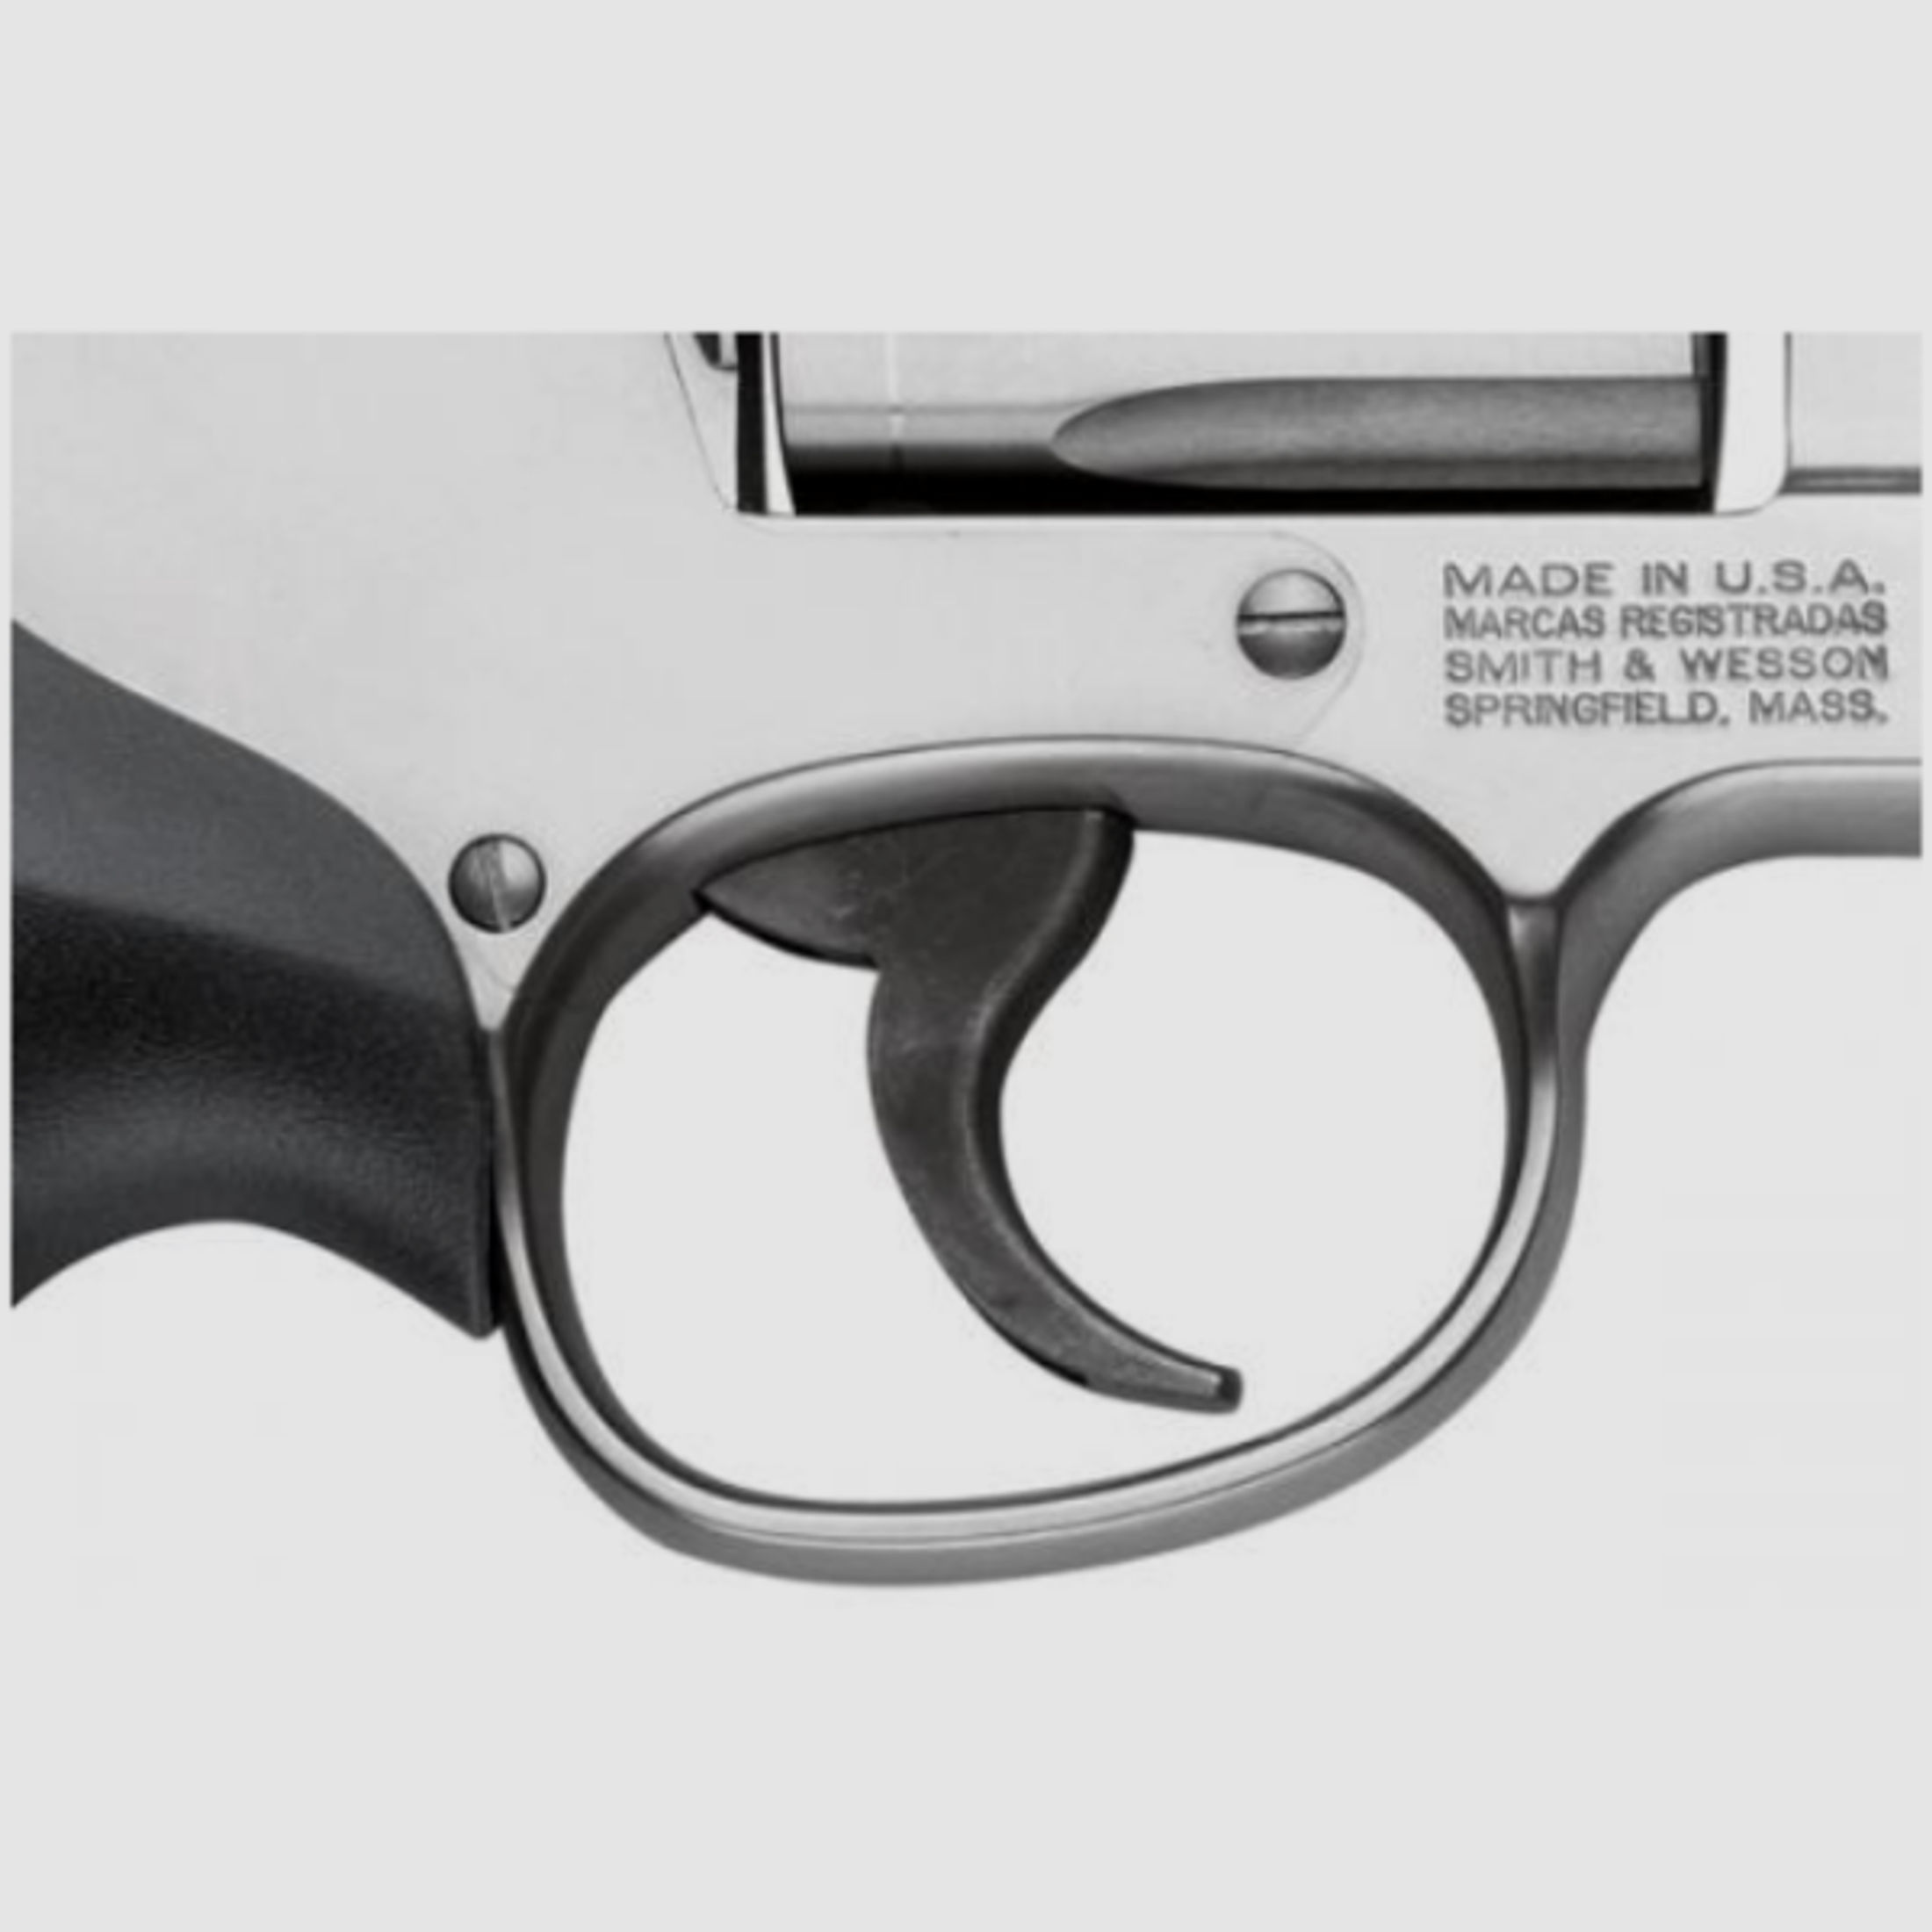 SMITH & WESSON Revolver Mod. 686 -6' .357Mag